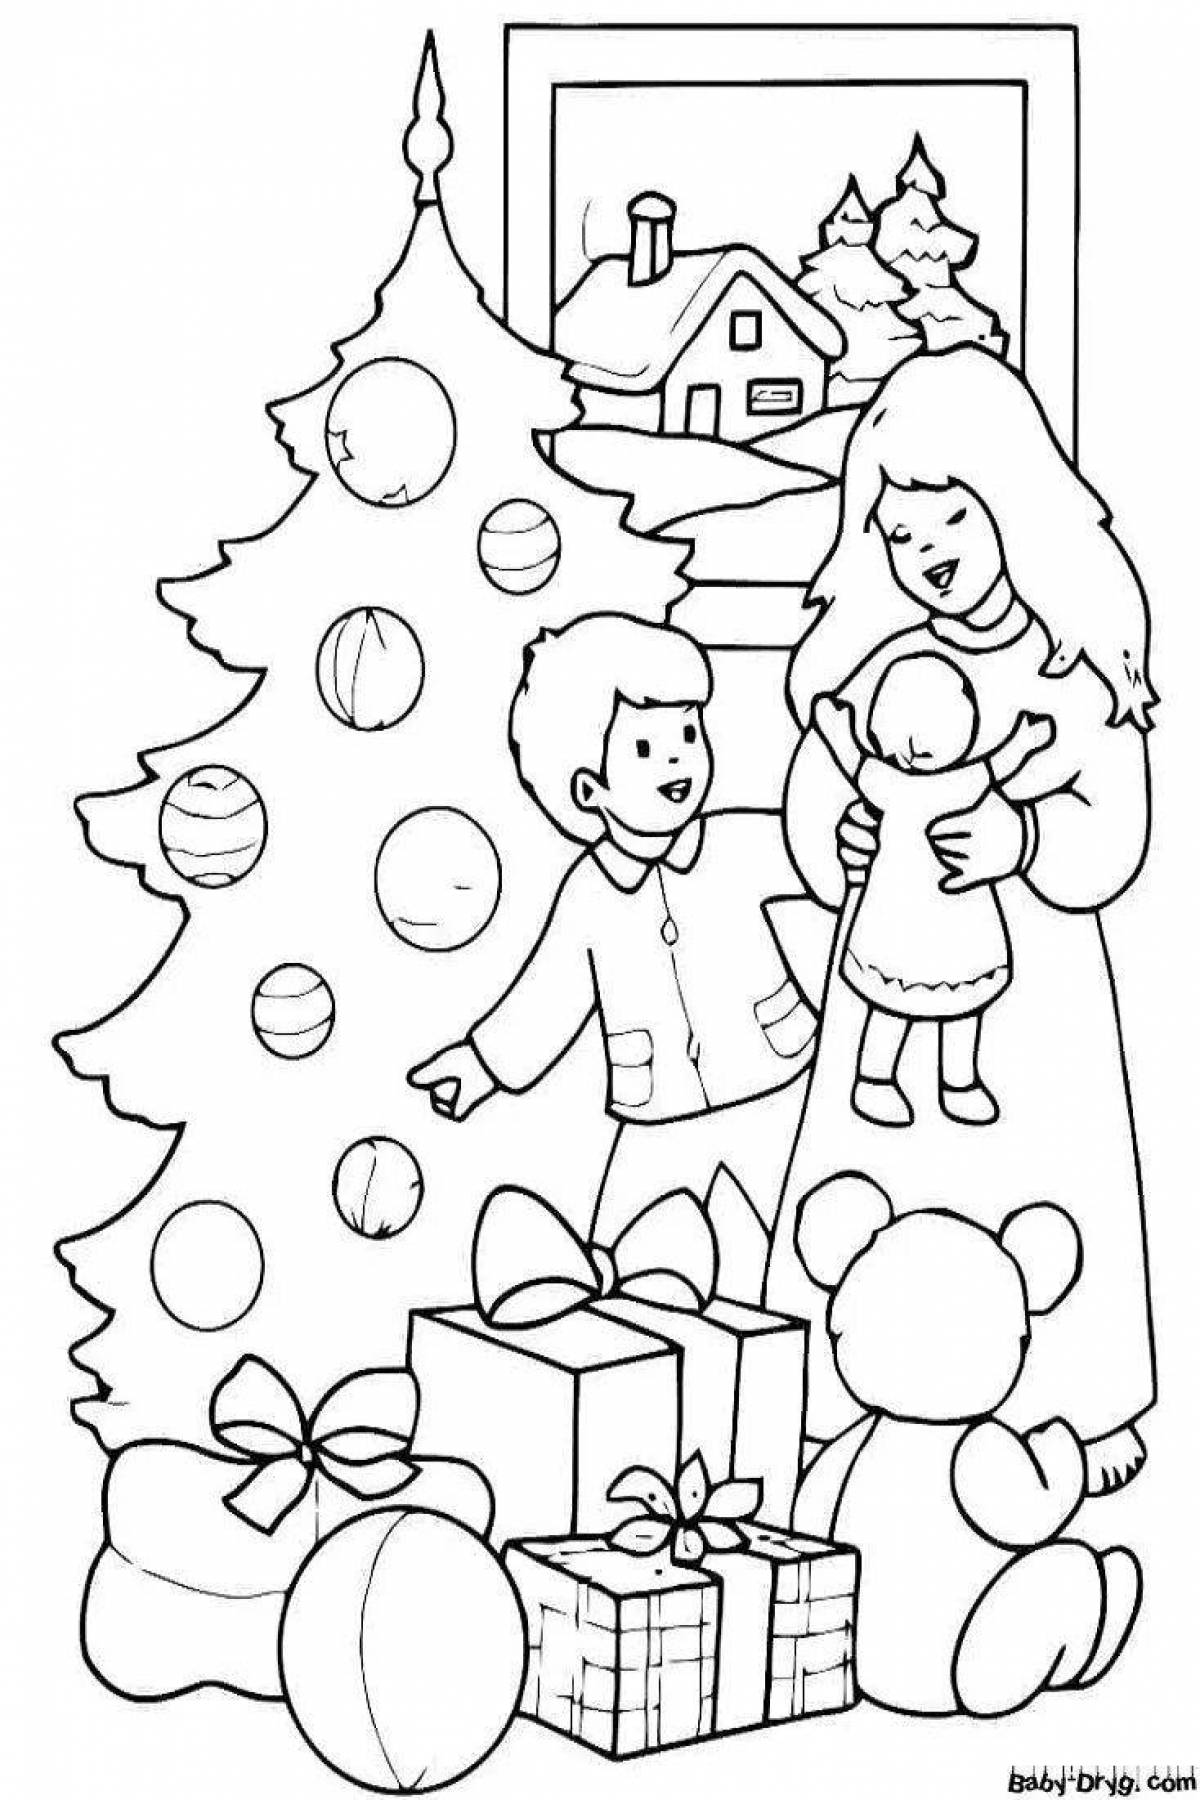 Fabulous Christmas family coloring book